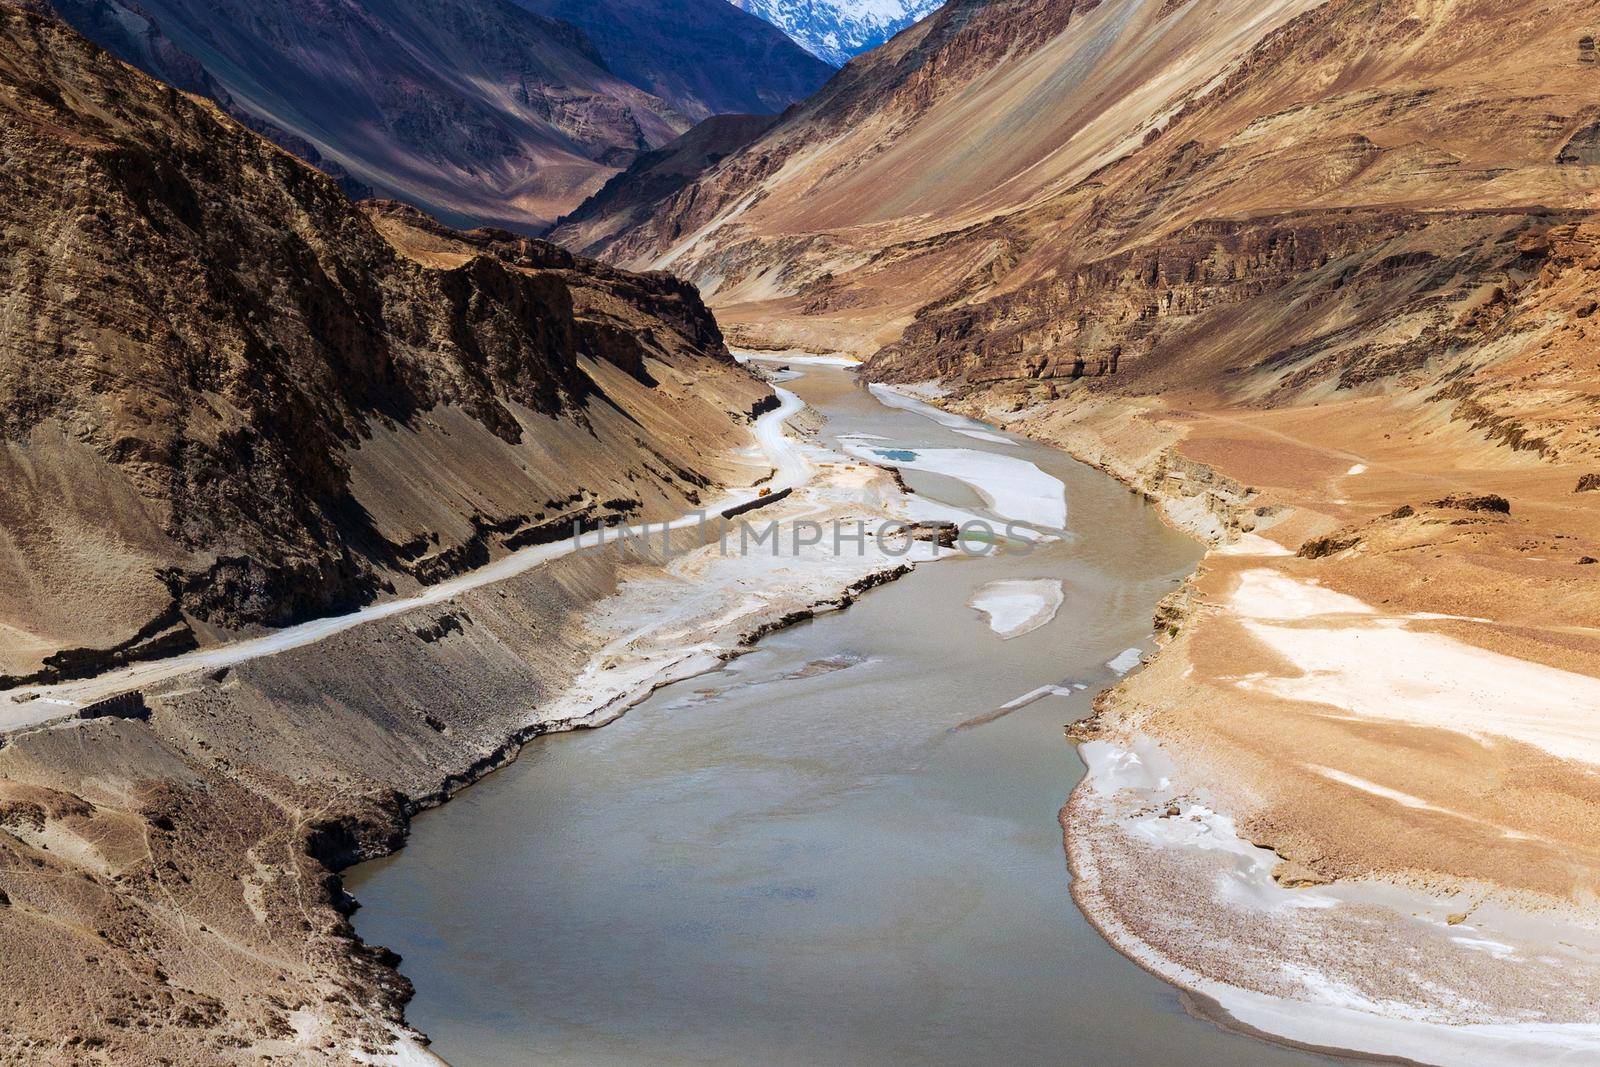 Confluence of Zanskar and Indus rivers - Leh, Ladakh, India
